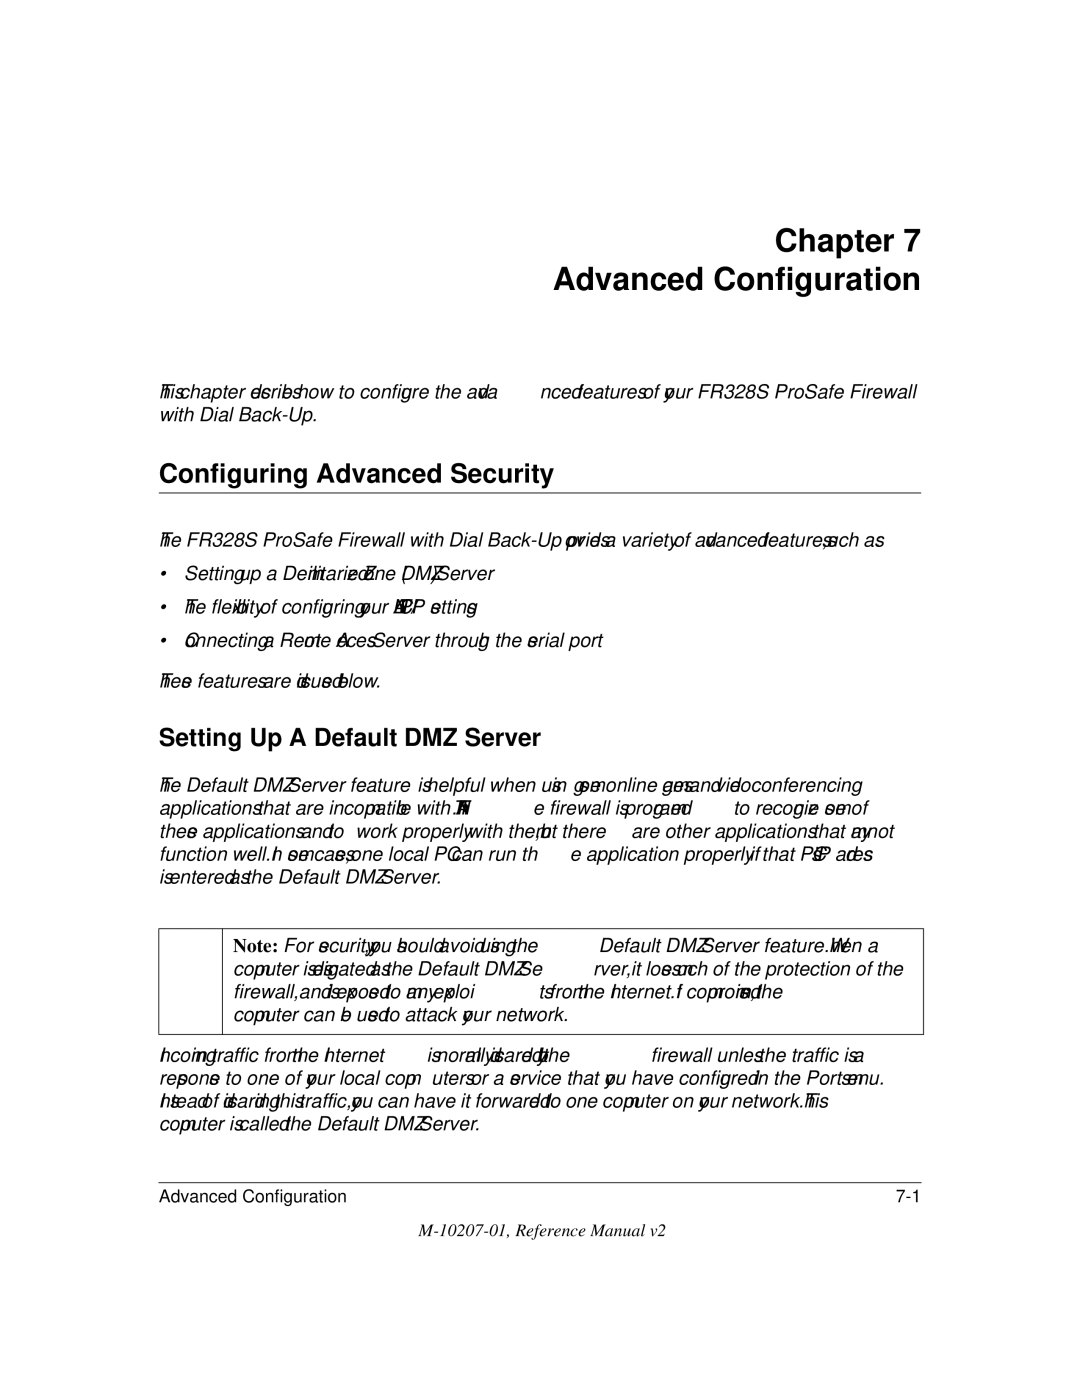 NETGEAR FR328S manual Chapter Advanced Configuration, Configuring Advanced Security, Setting Up a Default DMZ Server 